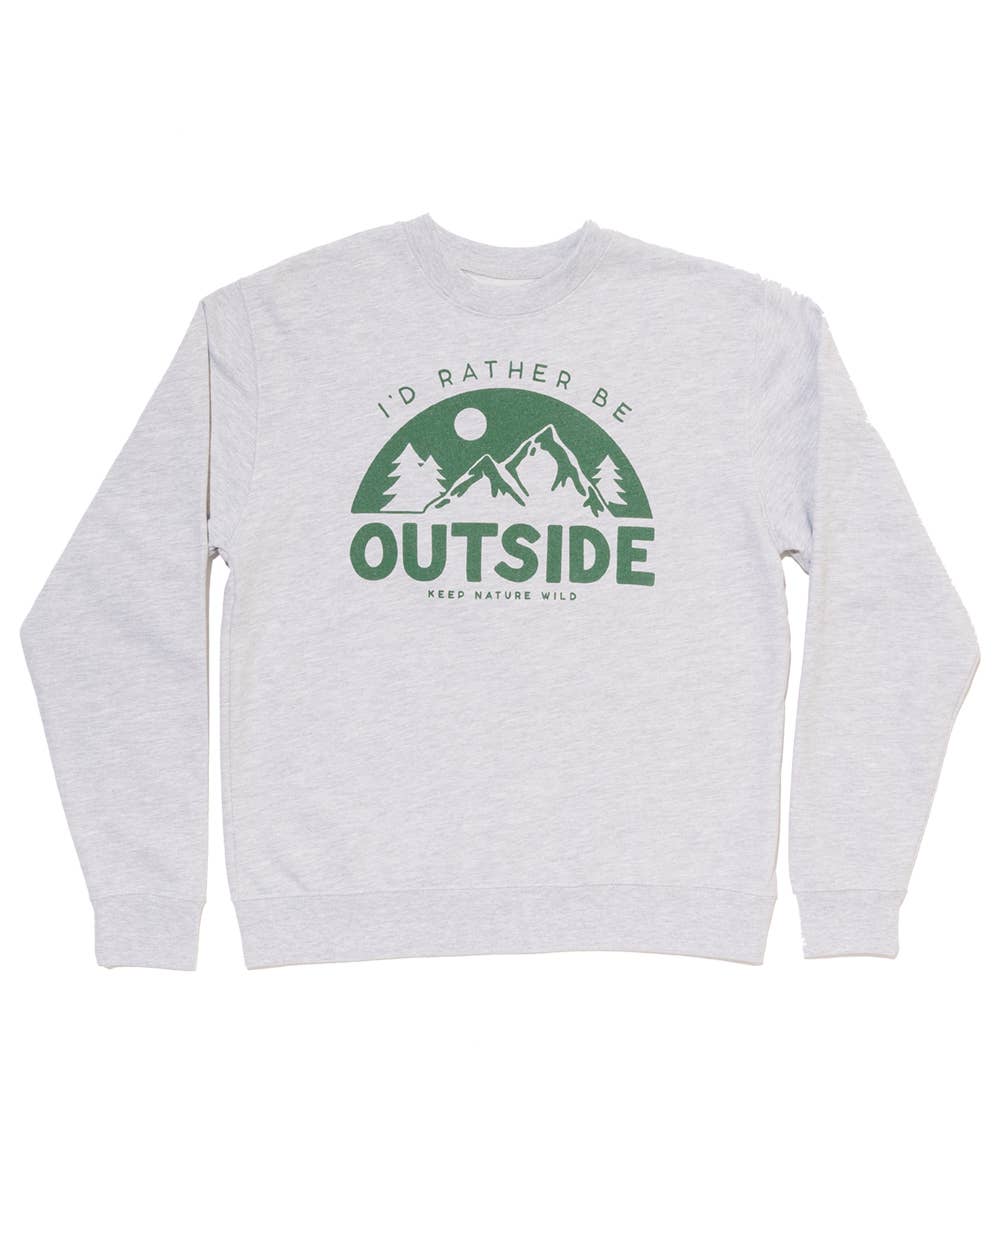 I'd rather be outside heather gray sweatshirt